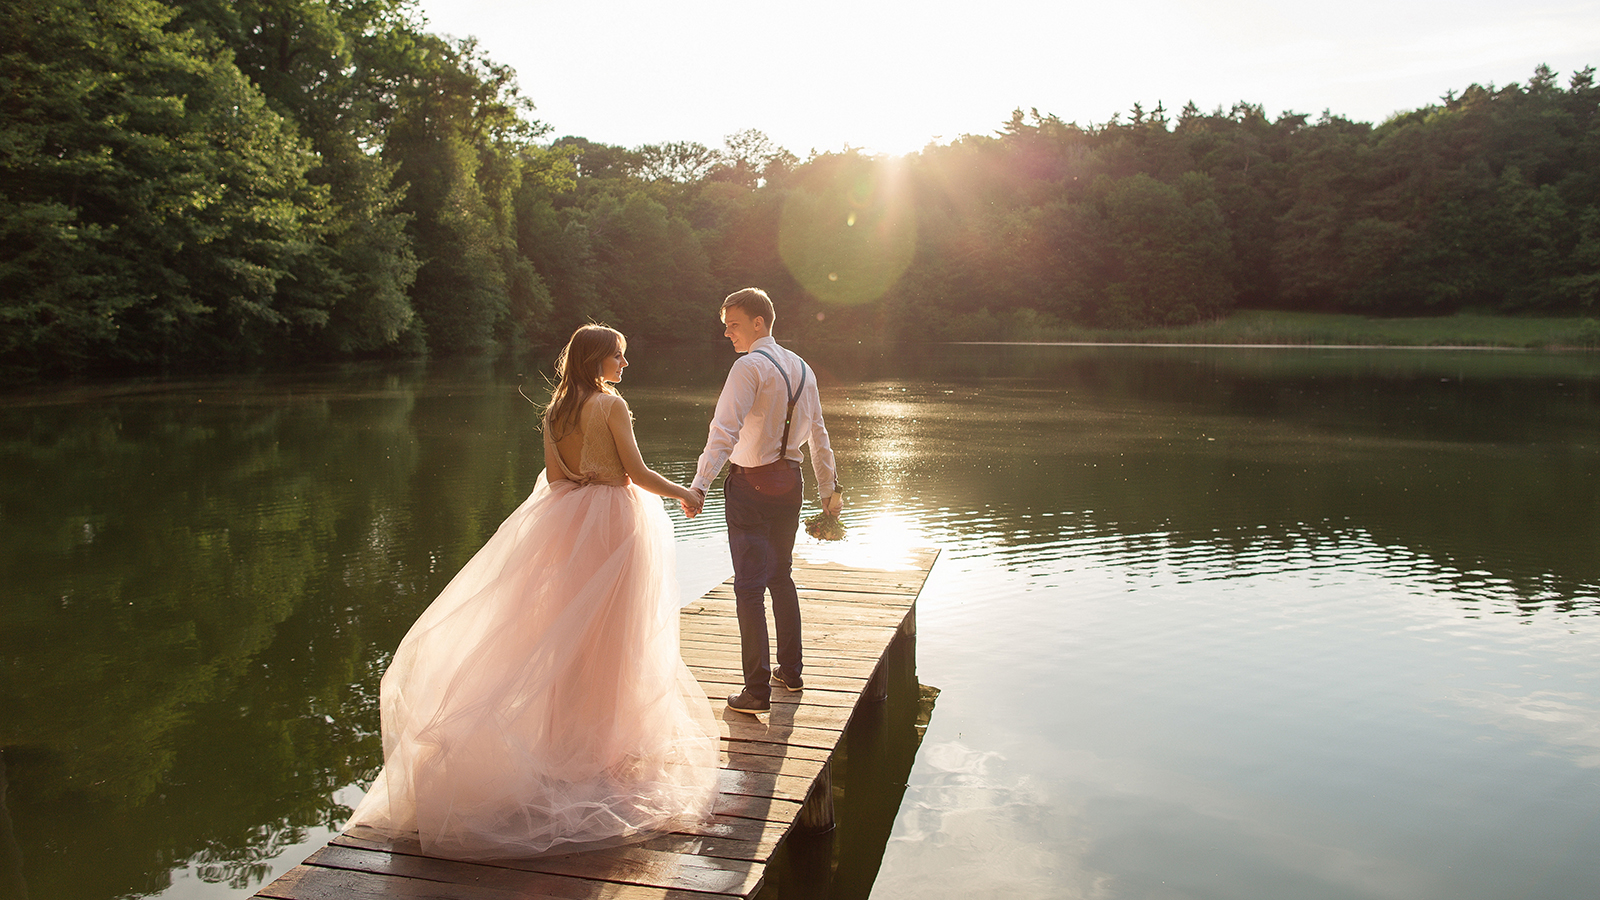 Wedding couple walking on bridge near lake on sunset at wedding day. Bride and groom in love